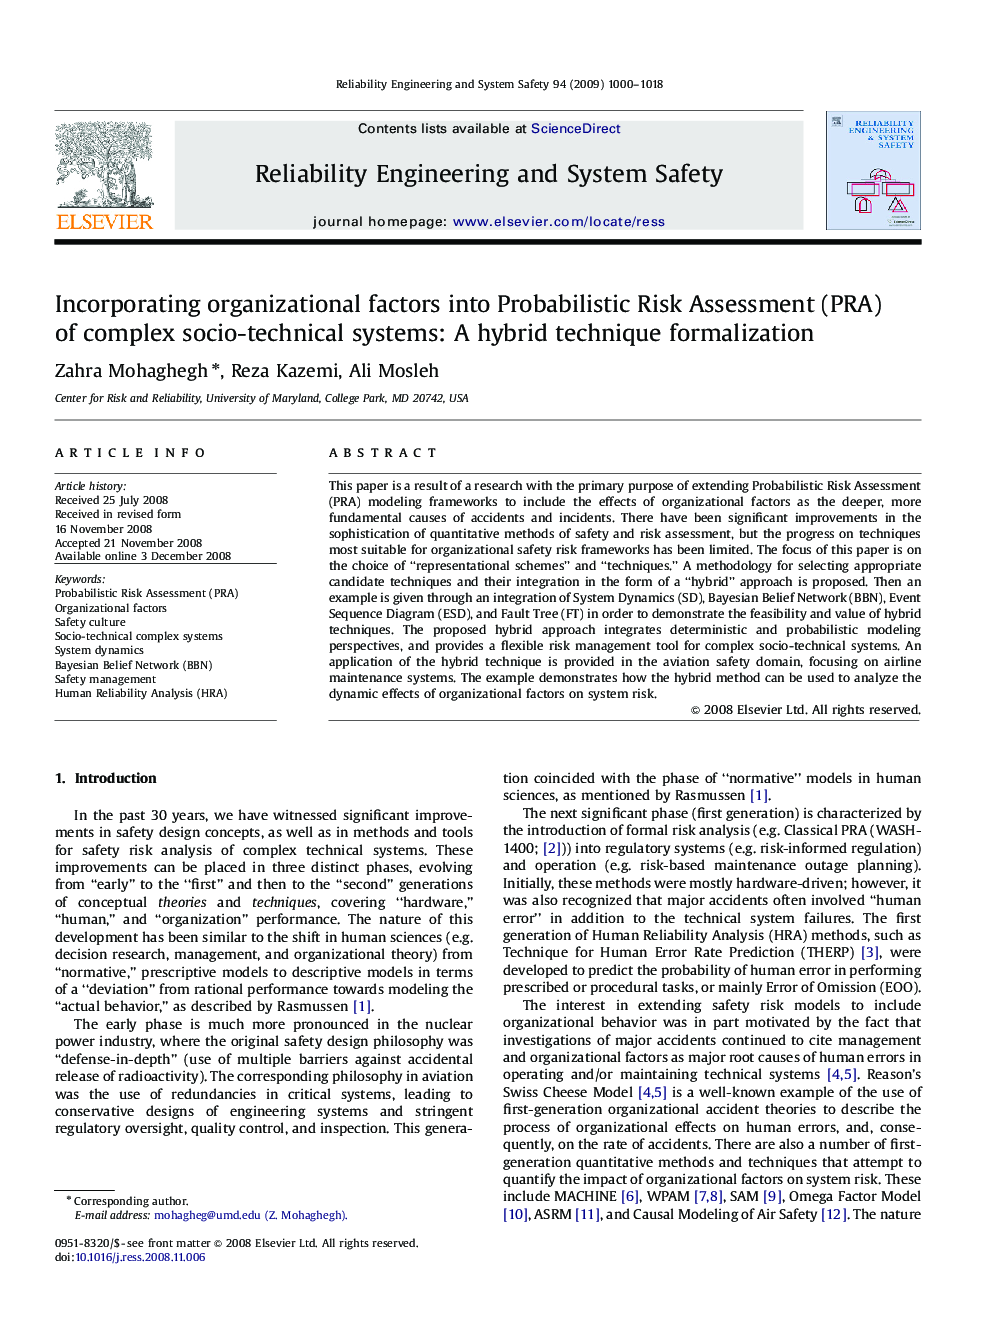 Incorporating organizational factors into Probabilistic Risk Assessment (PRA) of complex socio-technical systems: A hybrid technique formalization